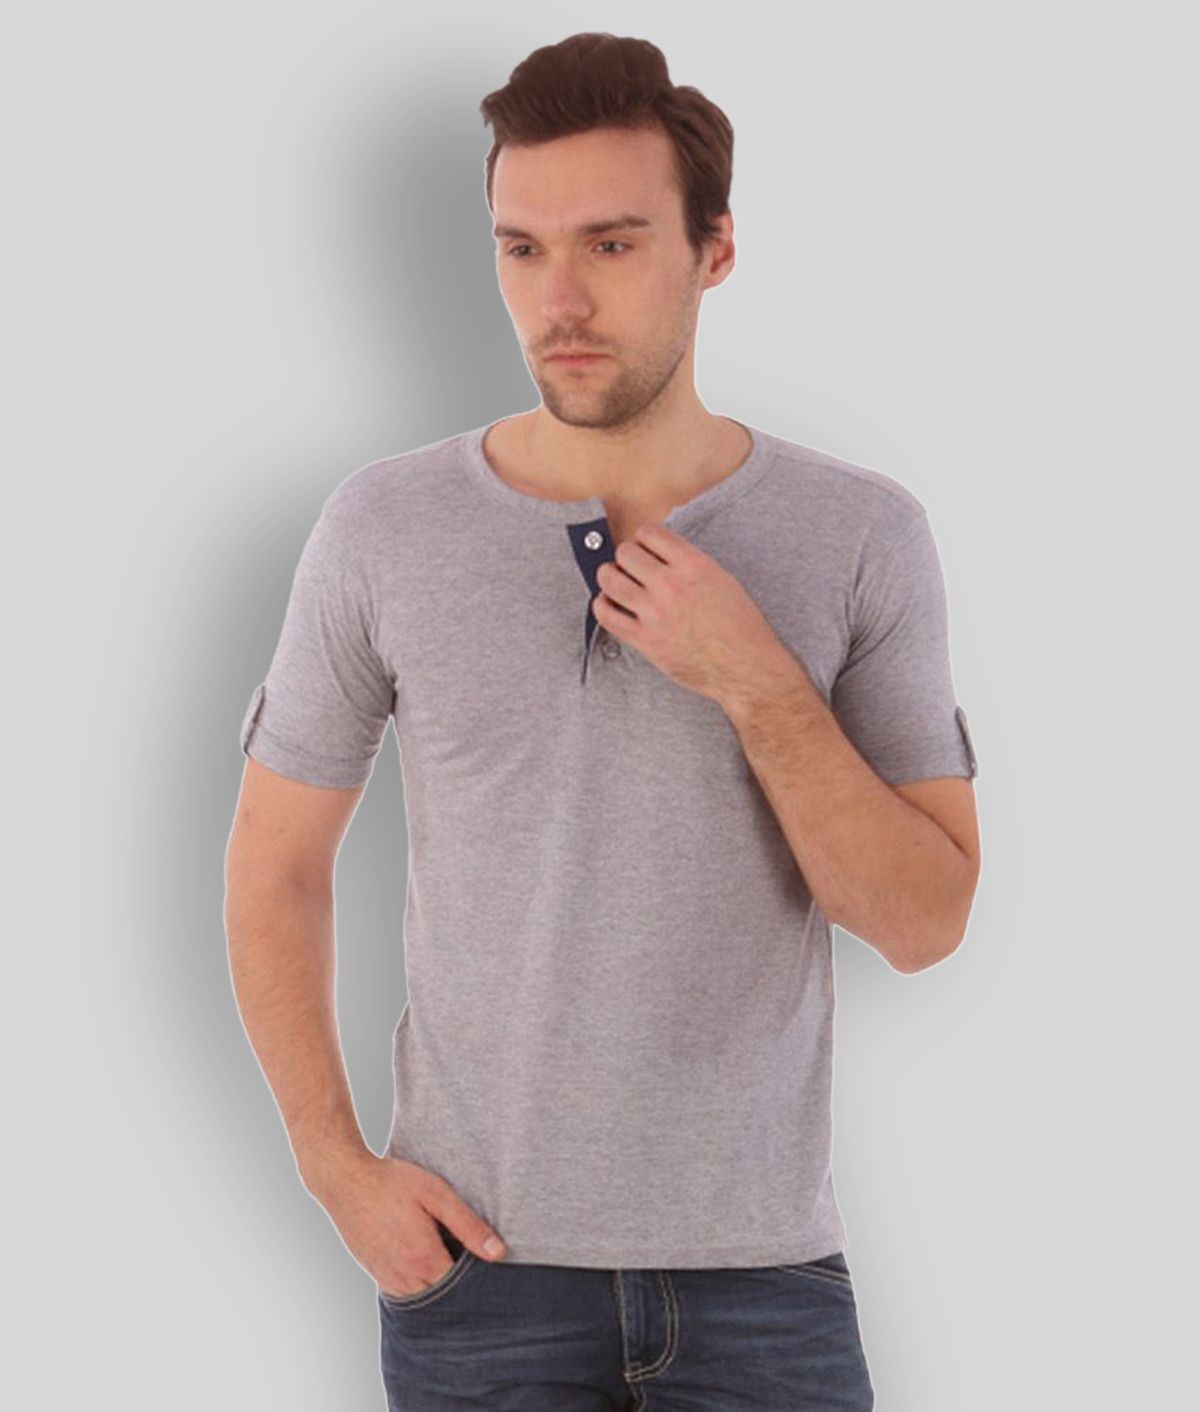     			Campus Sutra - Grey Melange Cotton Slim Fit Men's T-Shirt ( Pack of 1 )